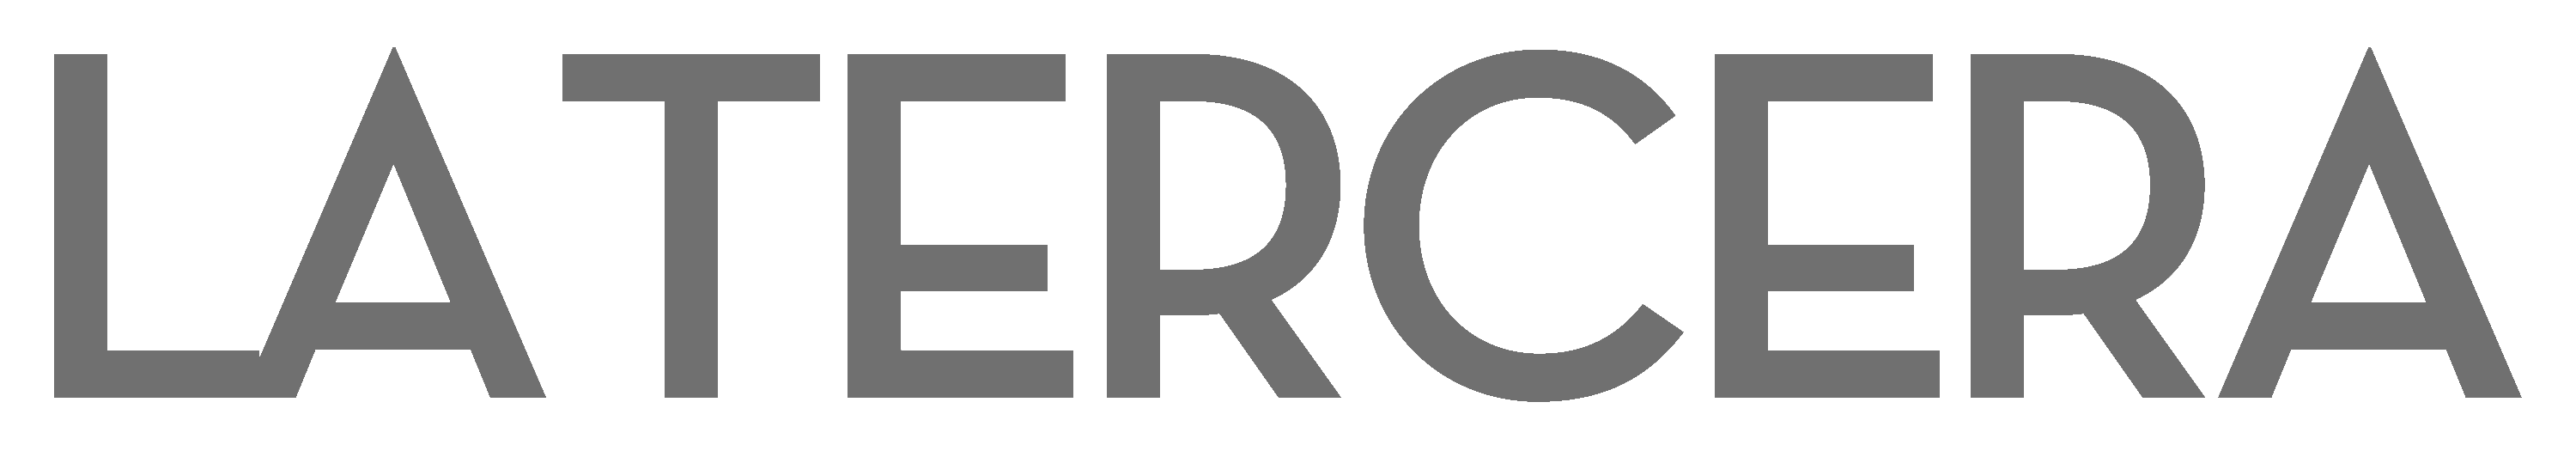 La Tercera Logo gris invertido